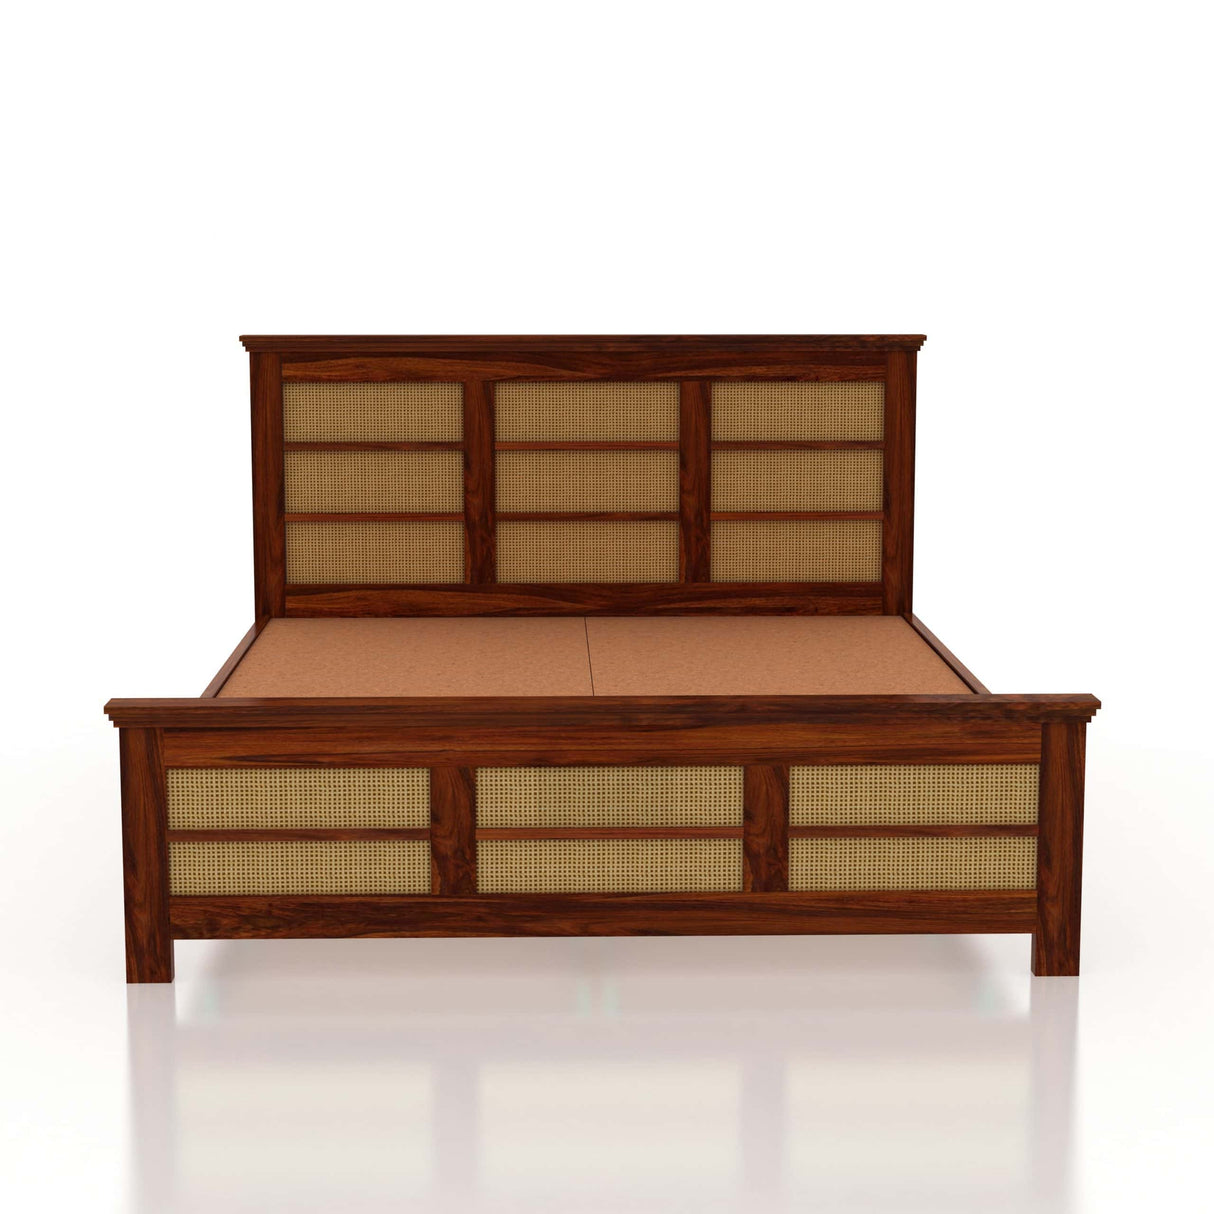 Syrus Solid Sheesham Wood Cane Bed - 1 Year Warranty